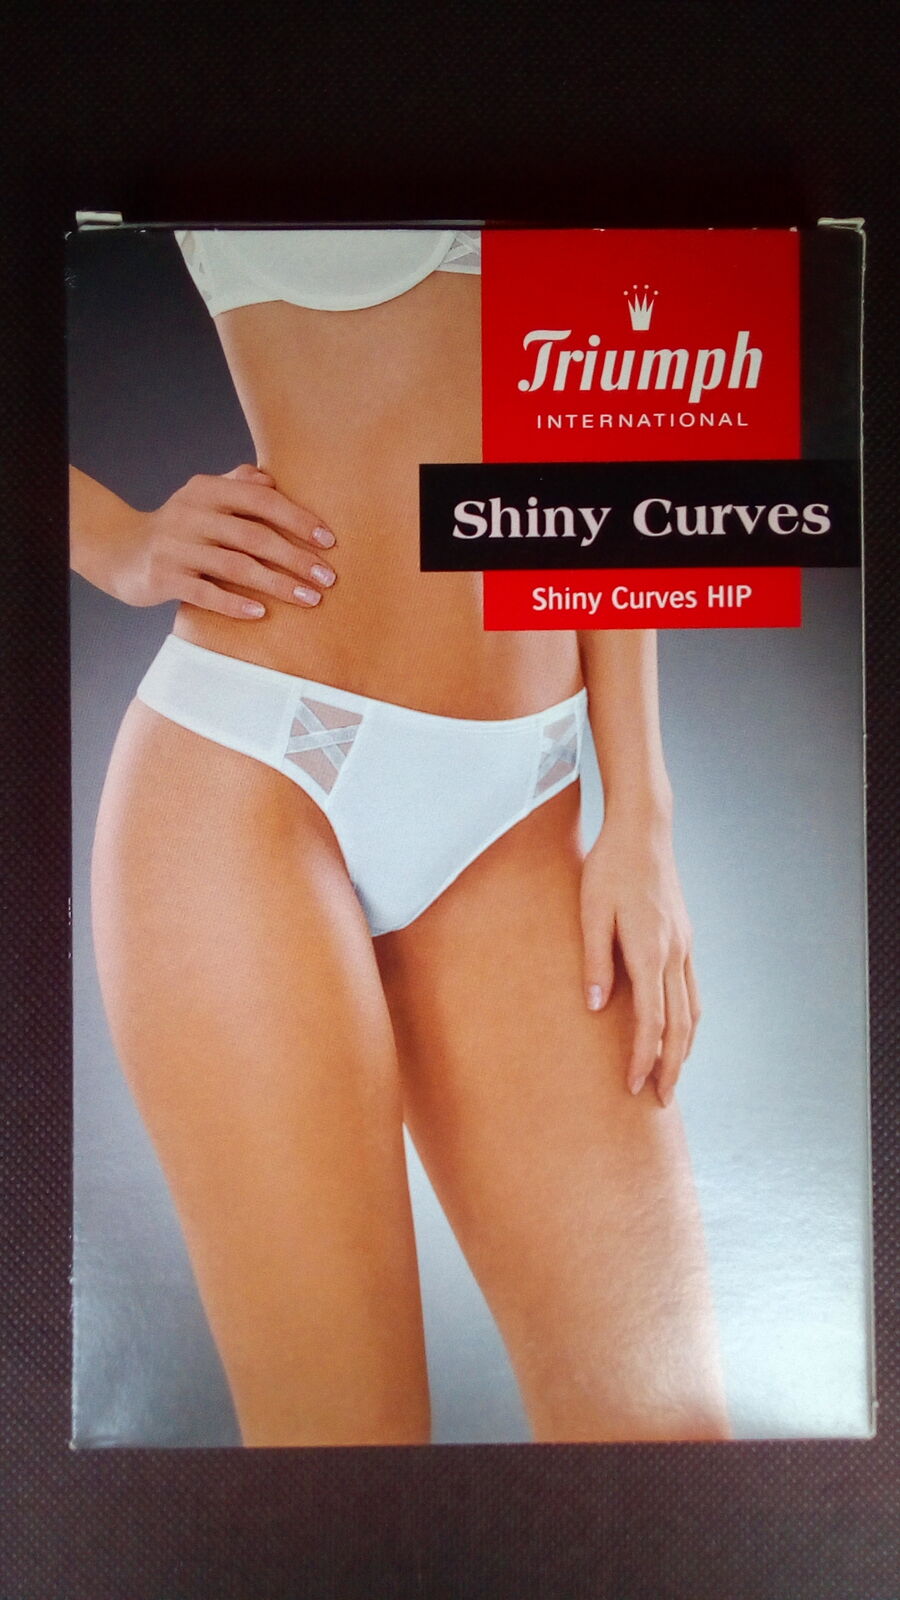 Triumph Shiny Curves HIP - Foto 1 di 1